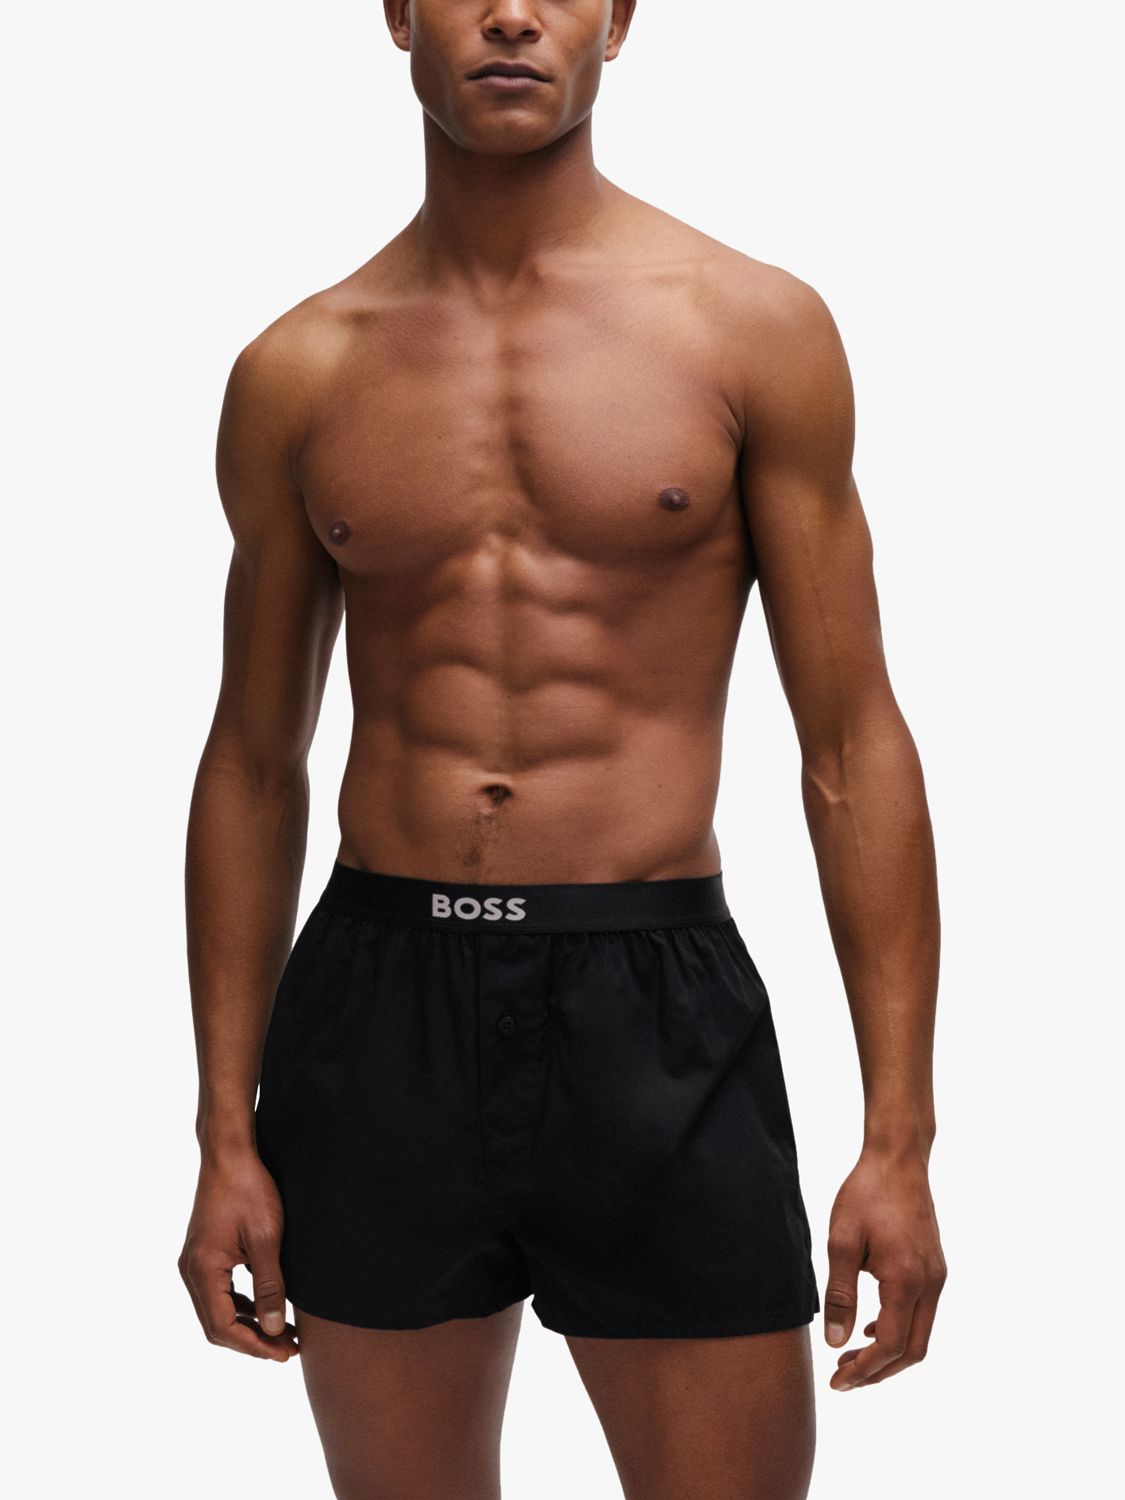 BOSS Stripe and Plain Cotton Boxers, Pack of 2, Dark Beige/Black, M